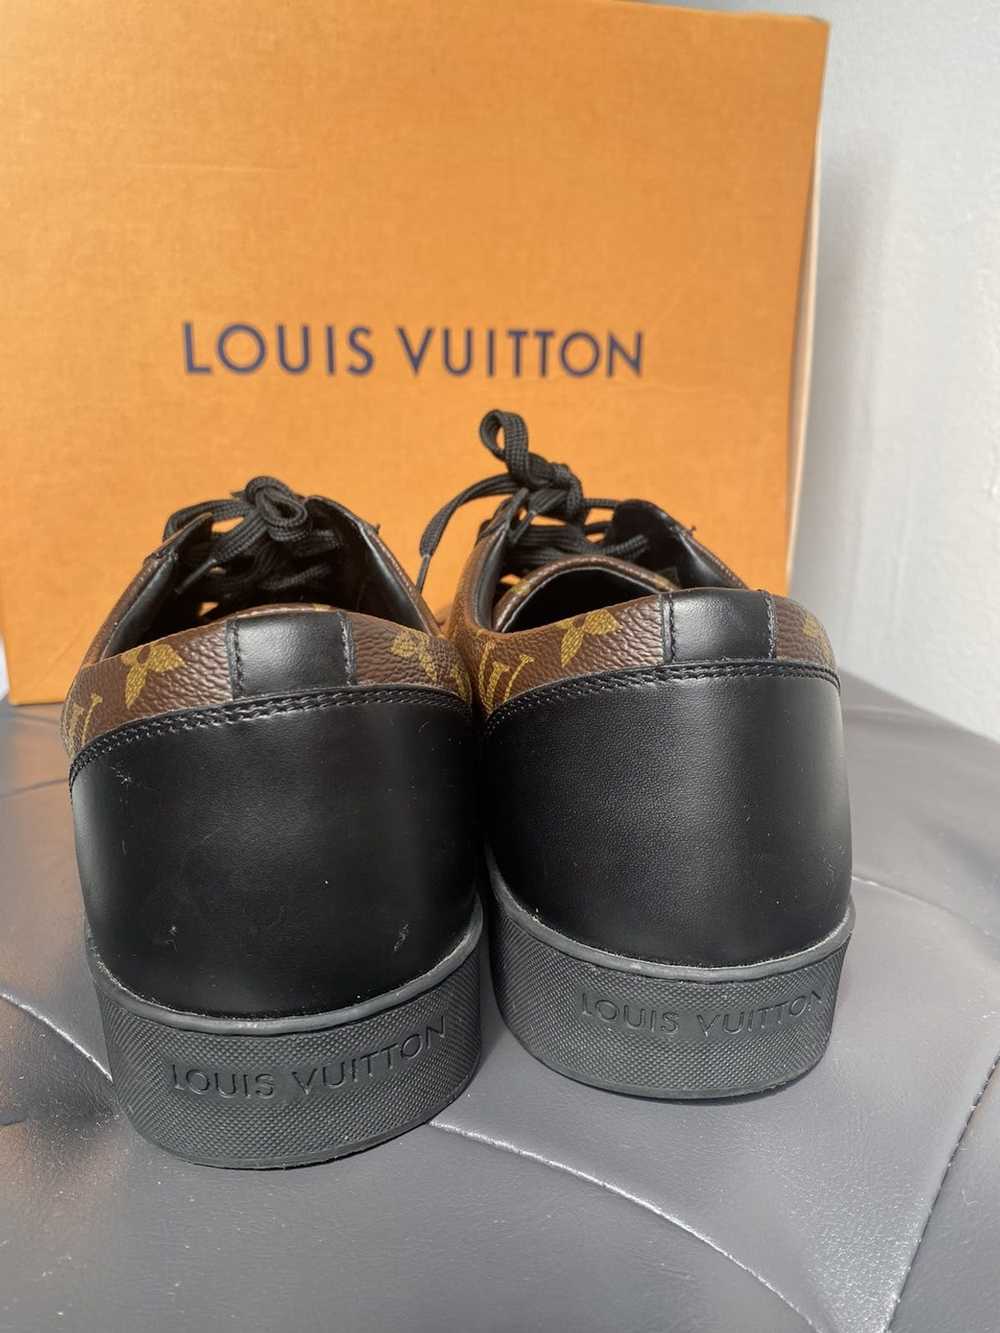 Louis Vuitton Mens US 9 Black Damier Sparkle Slip on Loafer Dress Shoe 1LV3L17